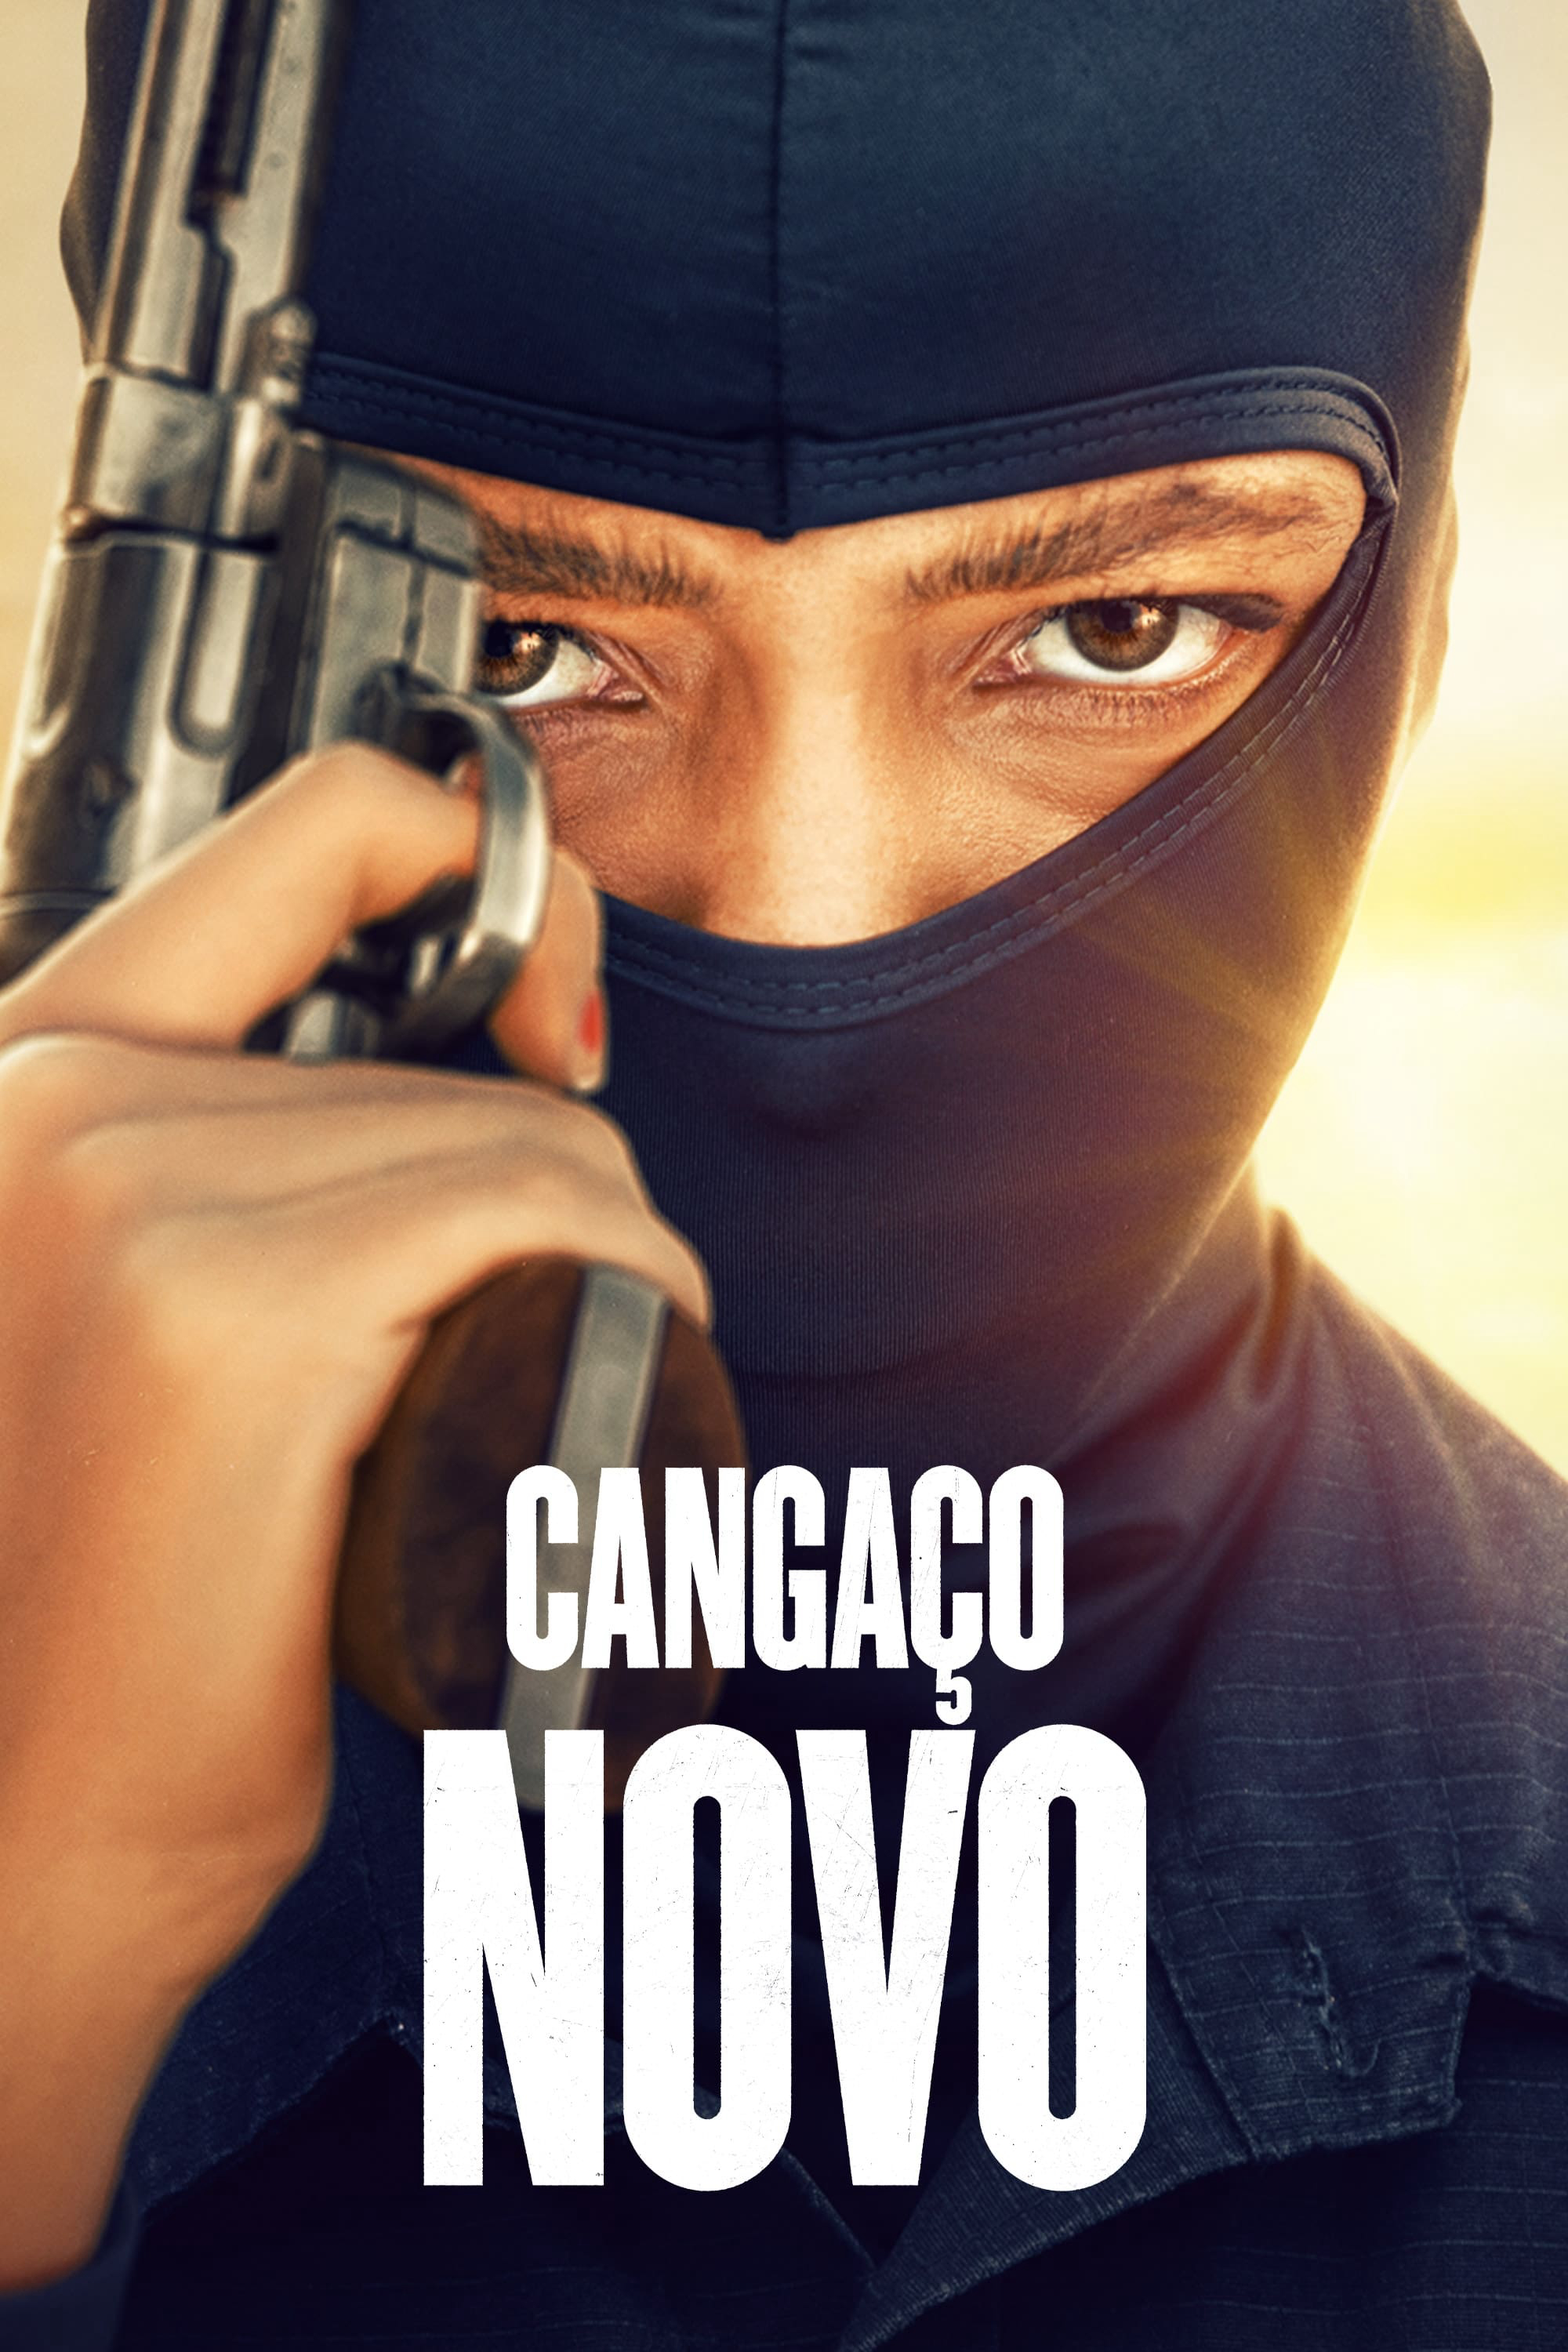 Cangaco Novo - New Bandits